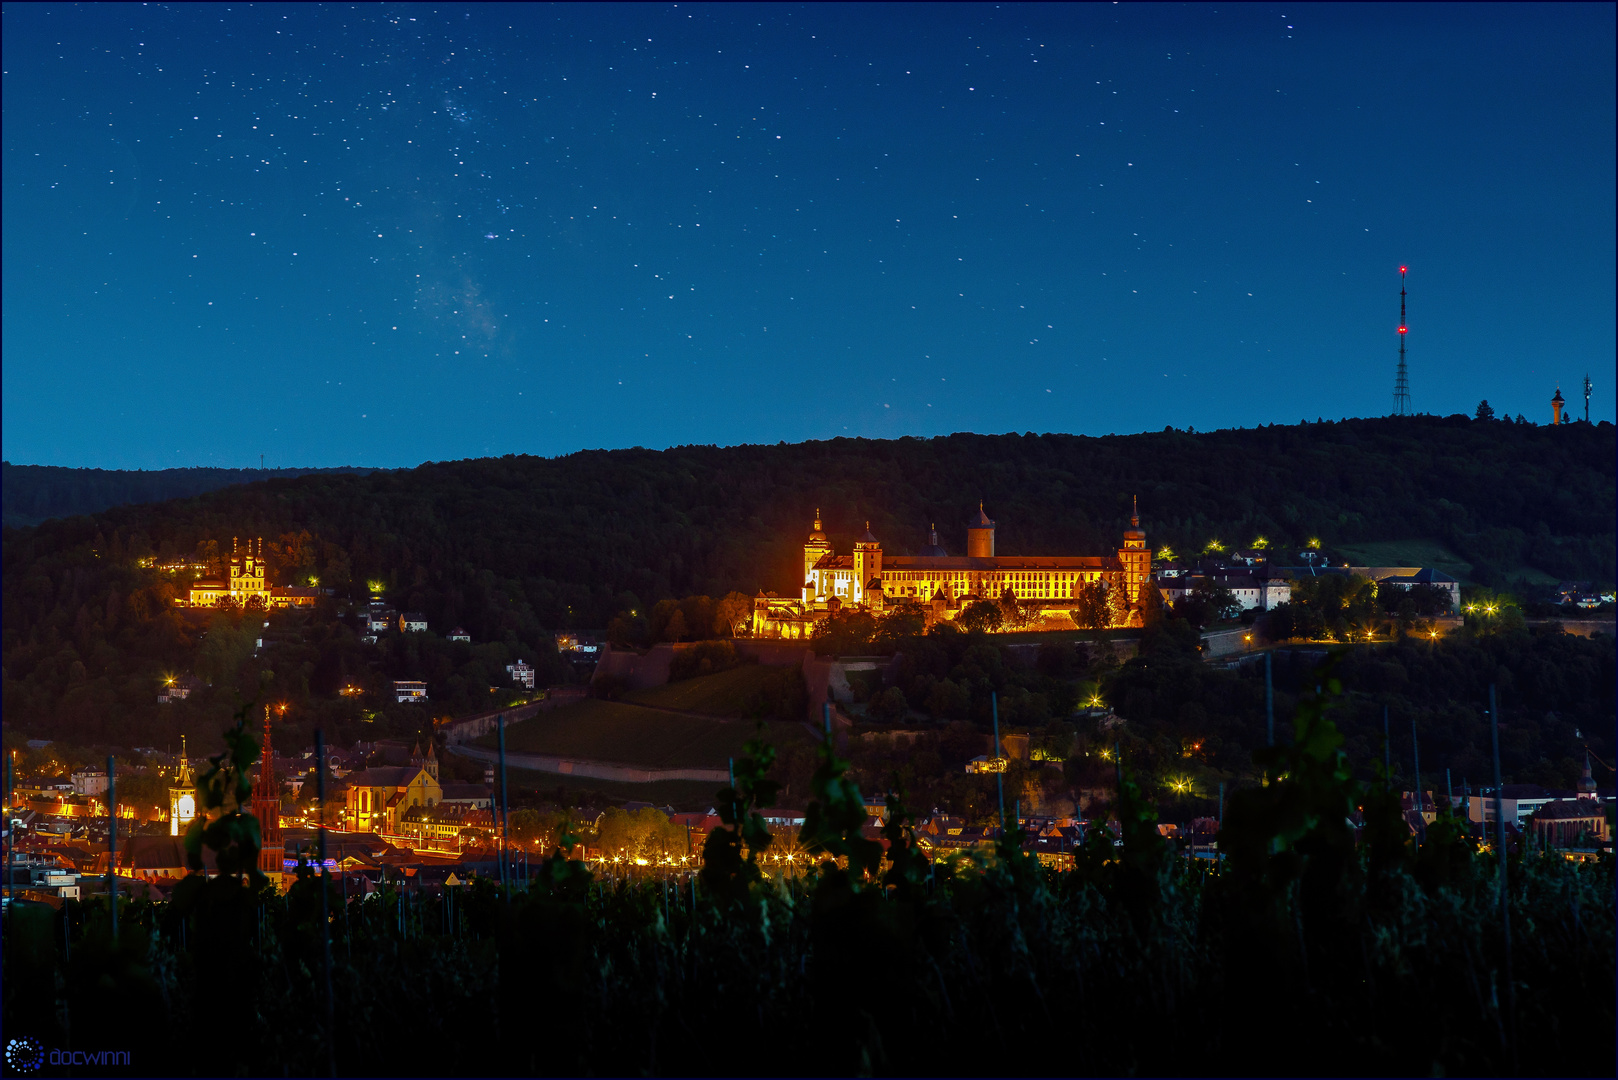 Würzburg at night